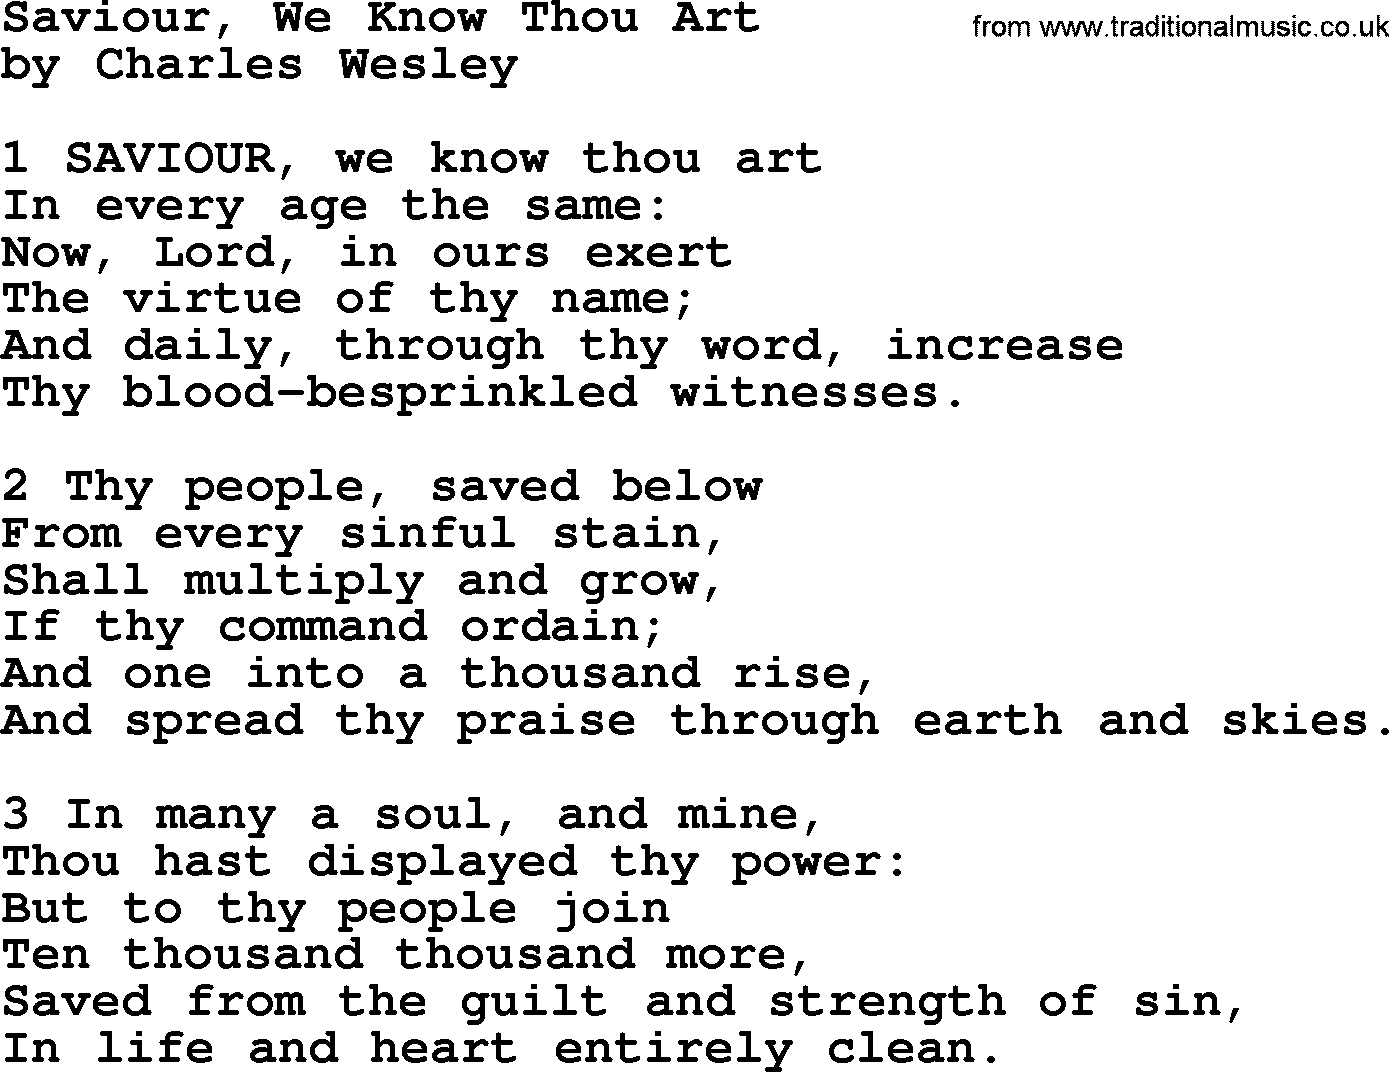 Charles Wesley hymn: Saviour, We Know Thou Art, lyrics